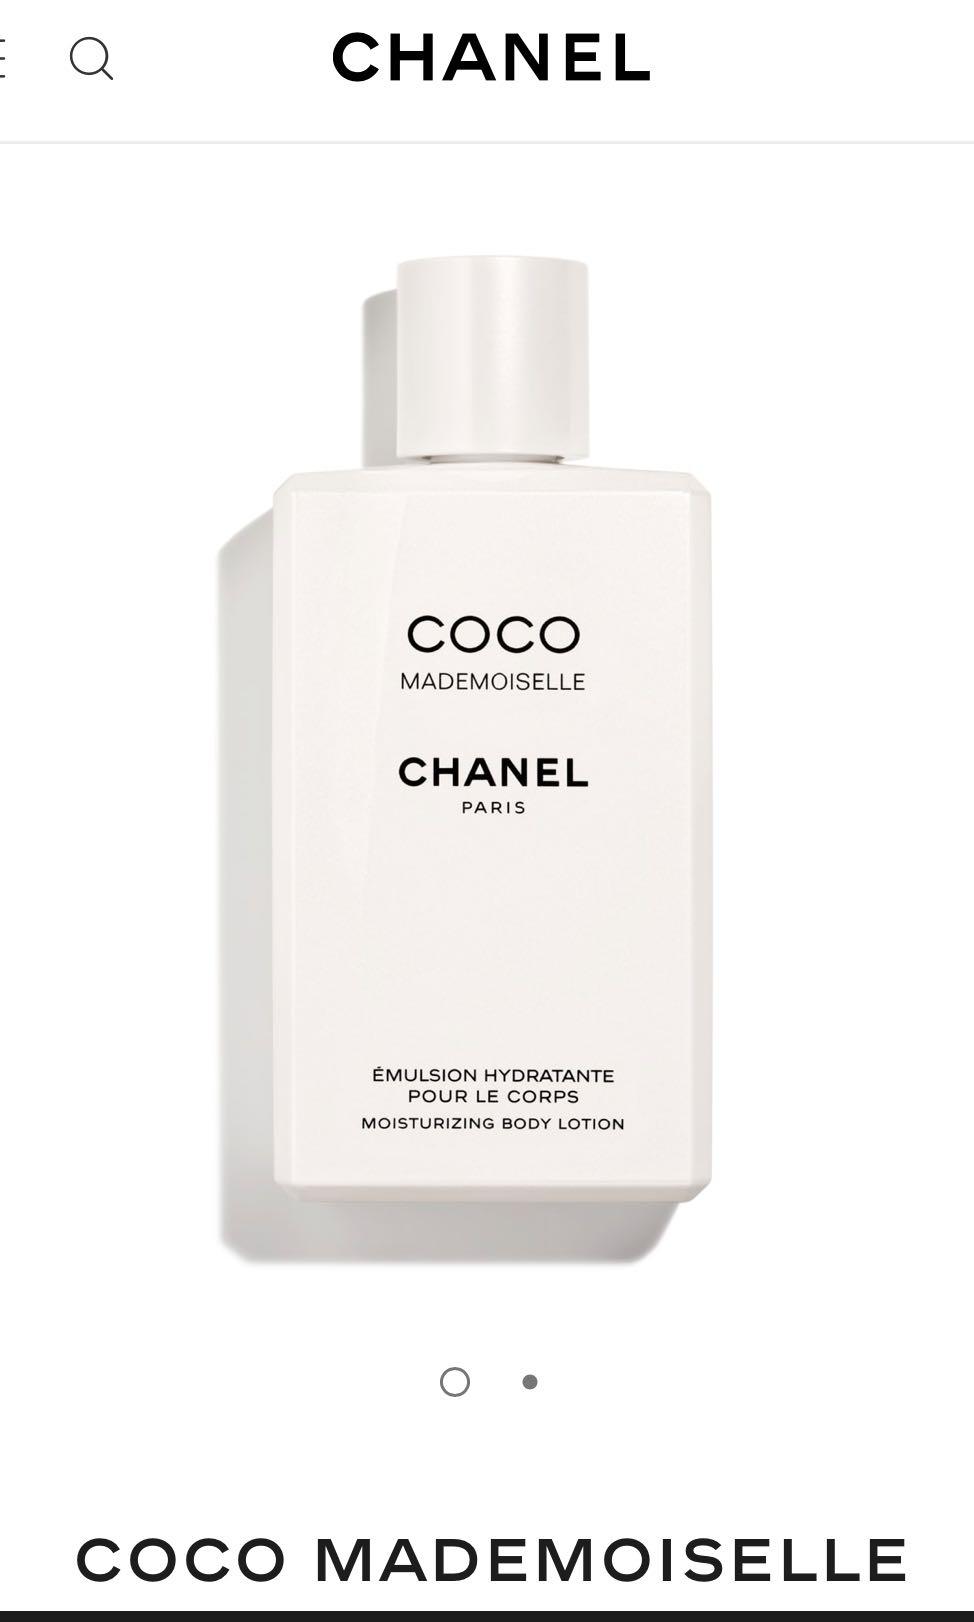 Chanel COCO MADEMOISELLE Foaming Shower Gel 6.8oz / 200ml NEW IN SEALED BOX